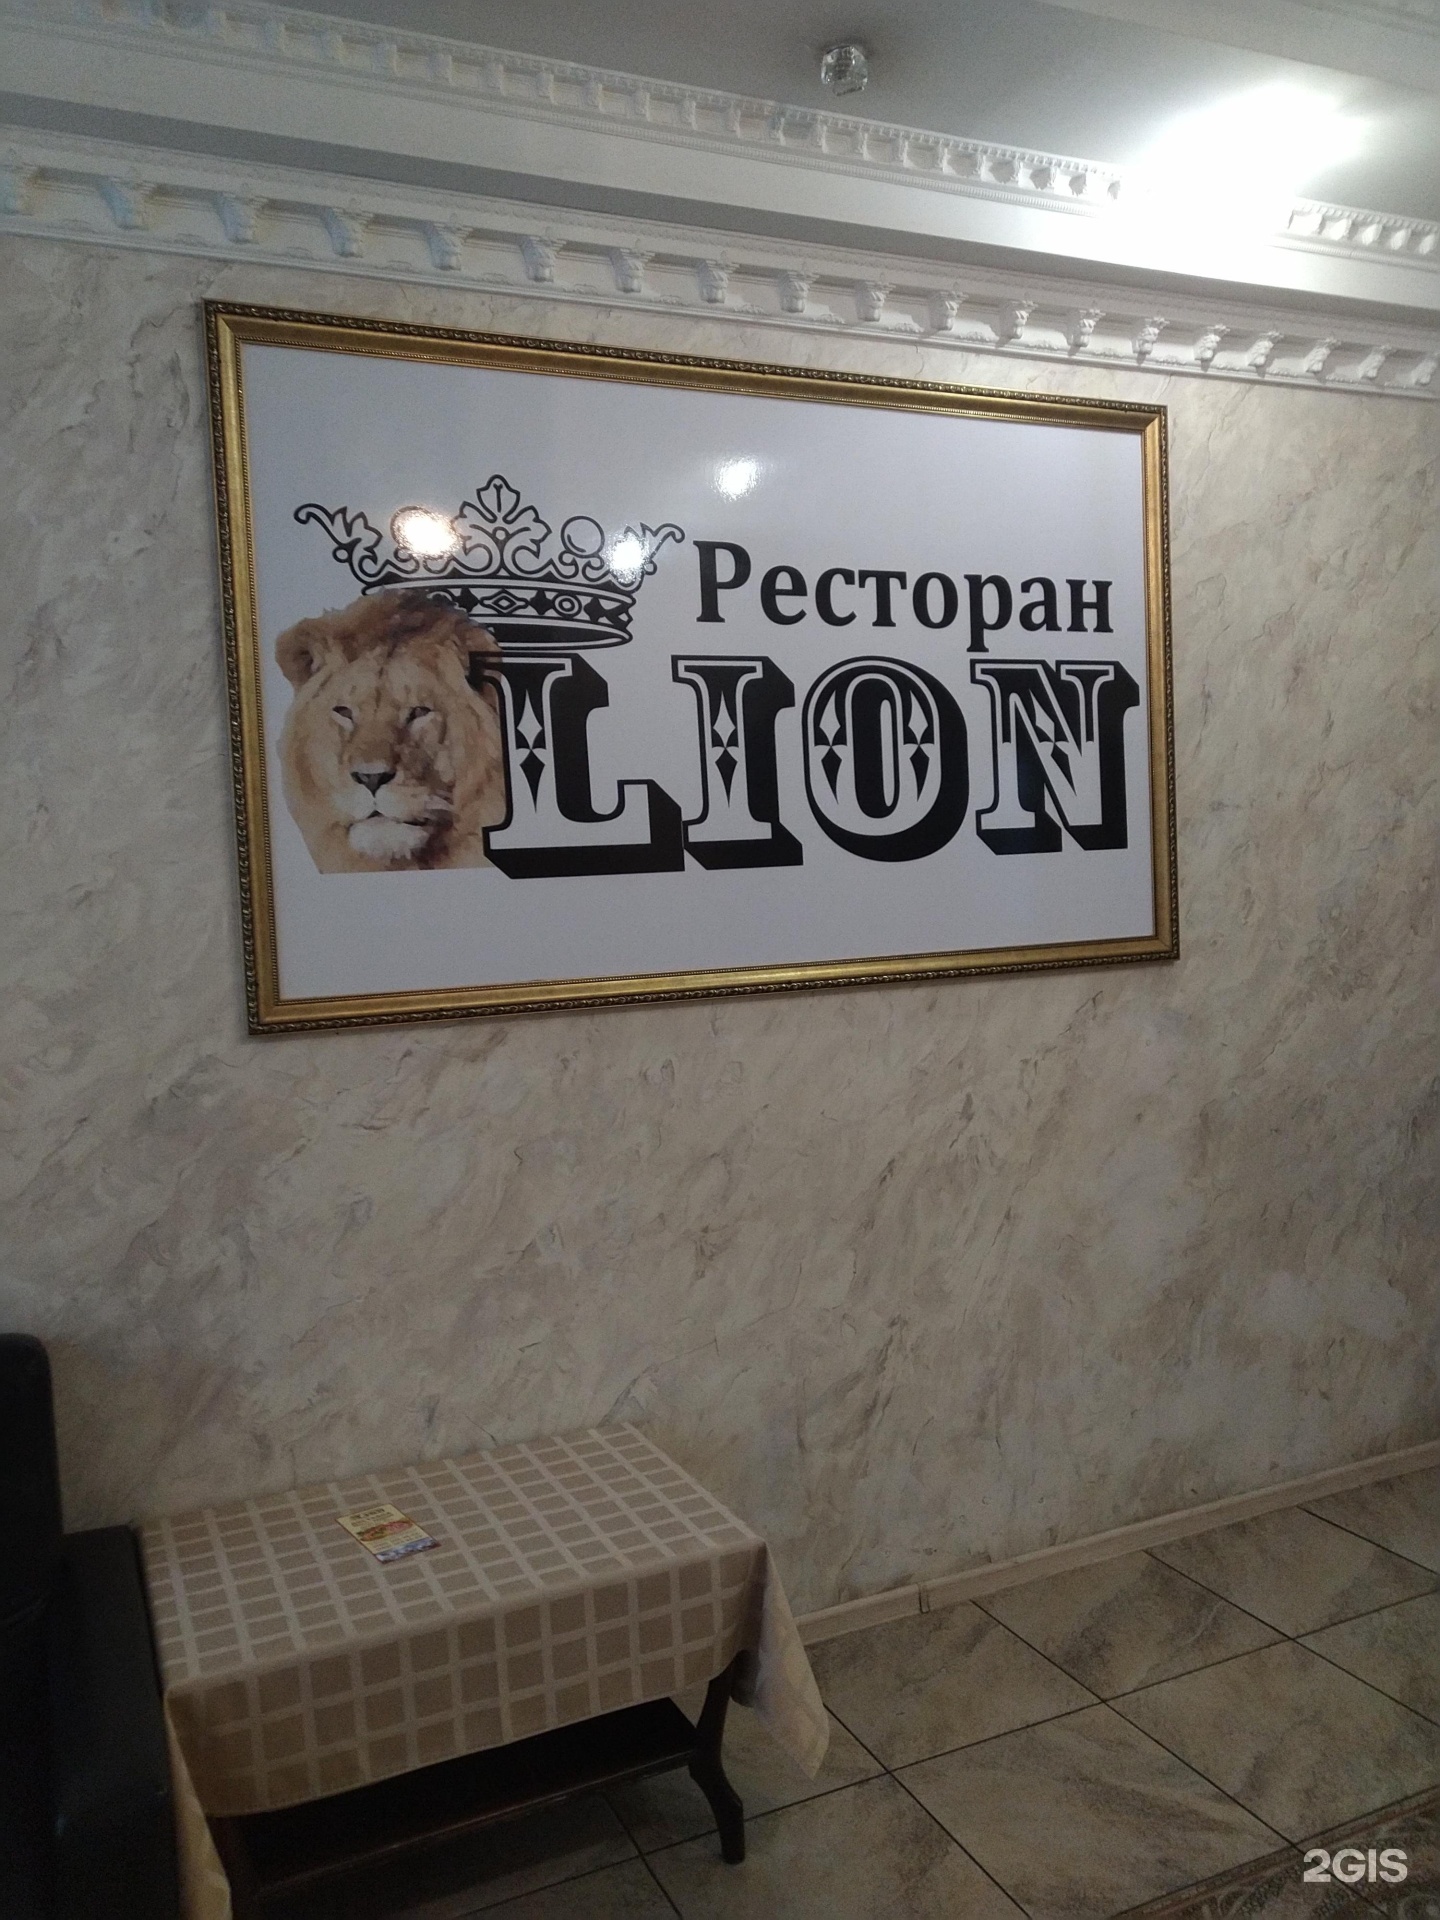 Ресторан у левы